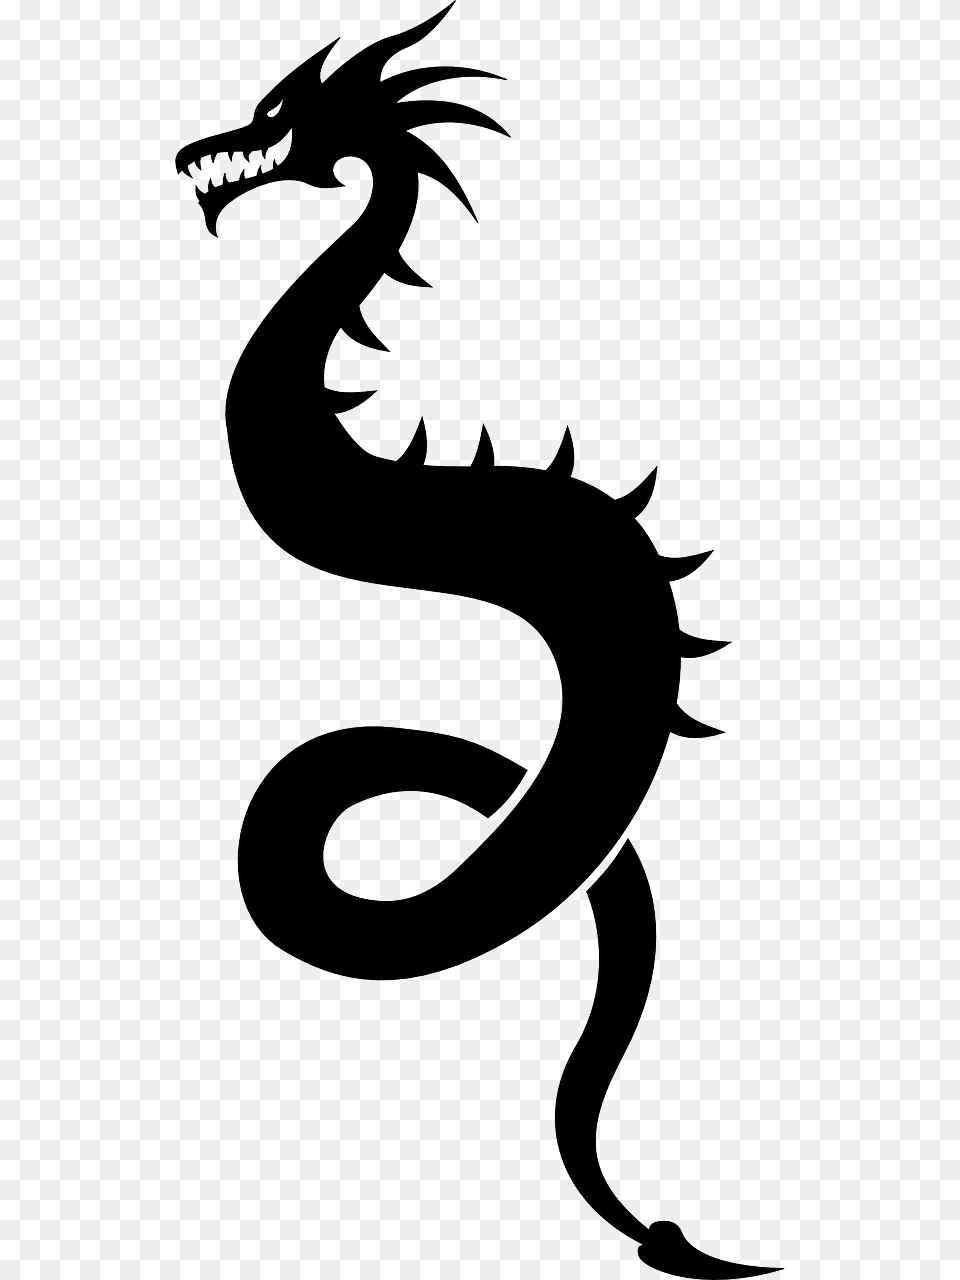 Dragonchinesedinosaurmythical Creaturelegendary Creature, Dragon, Animal, Fish, Sea Life Free Png